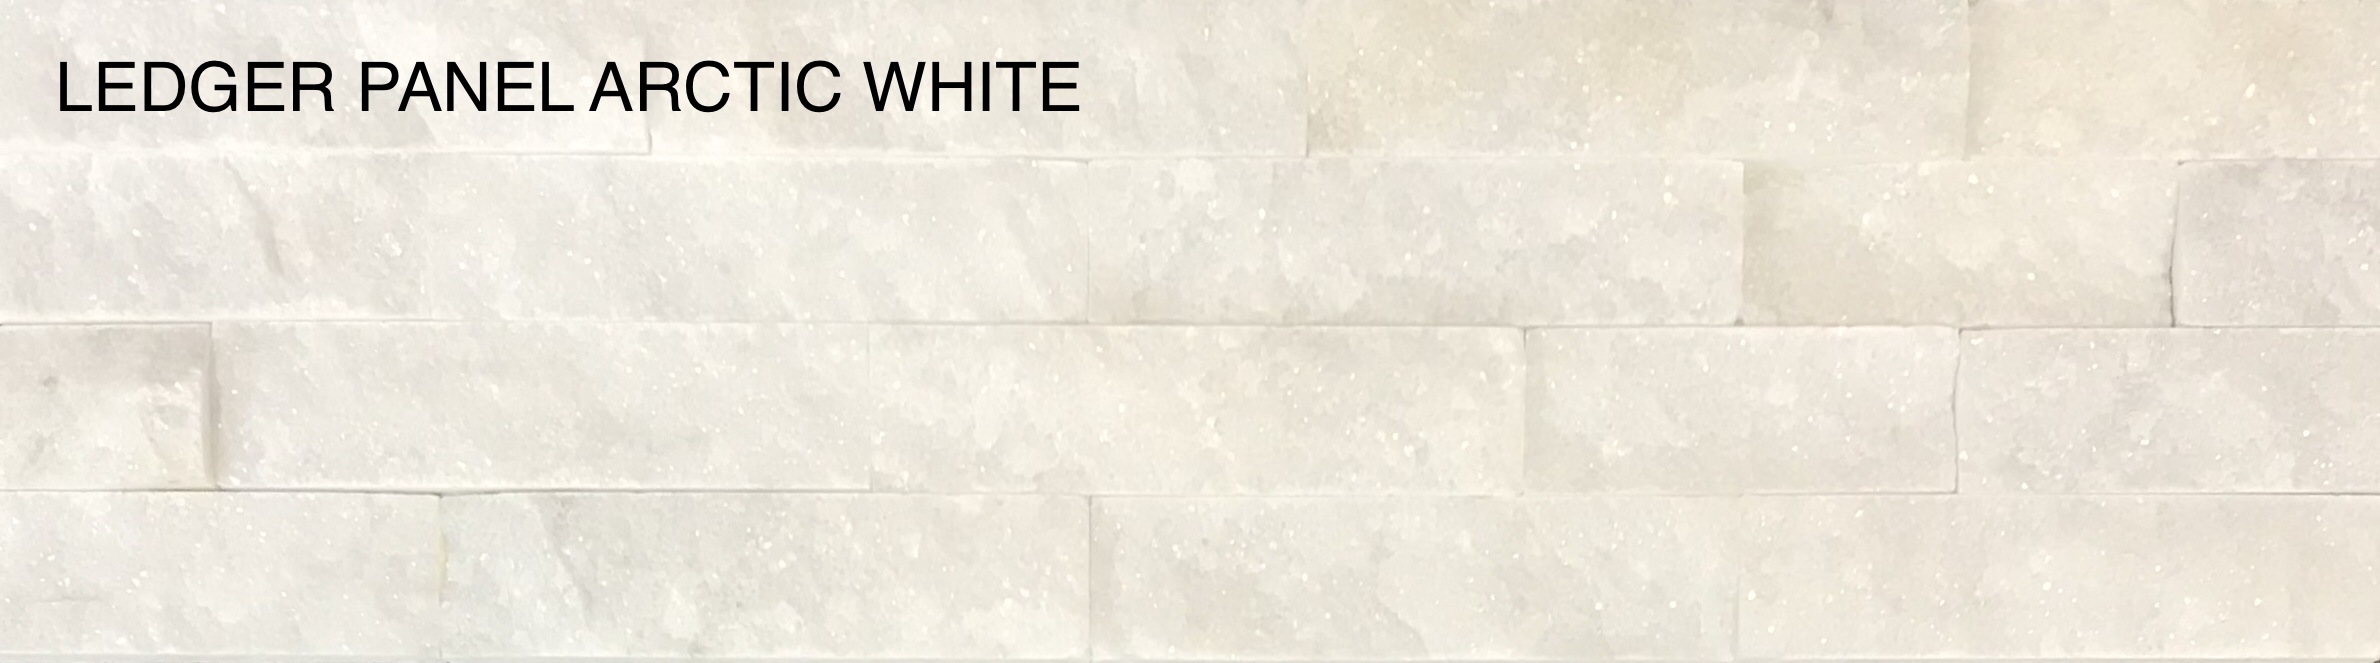 Leger Panel Arctic White